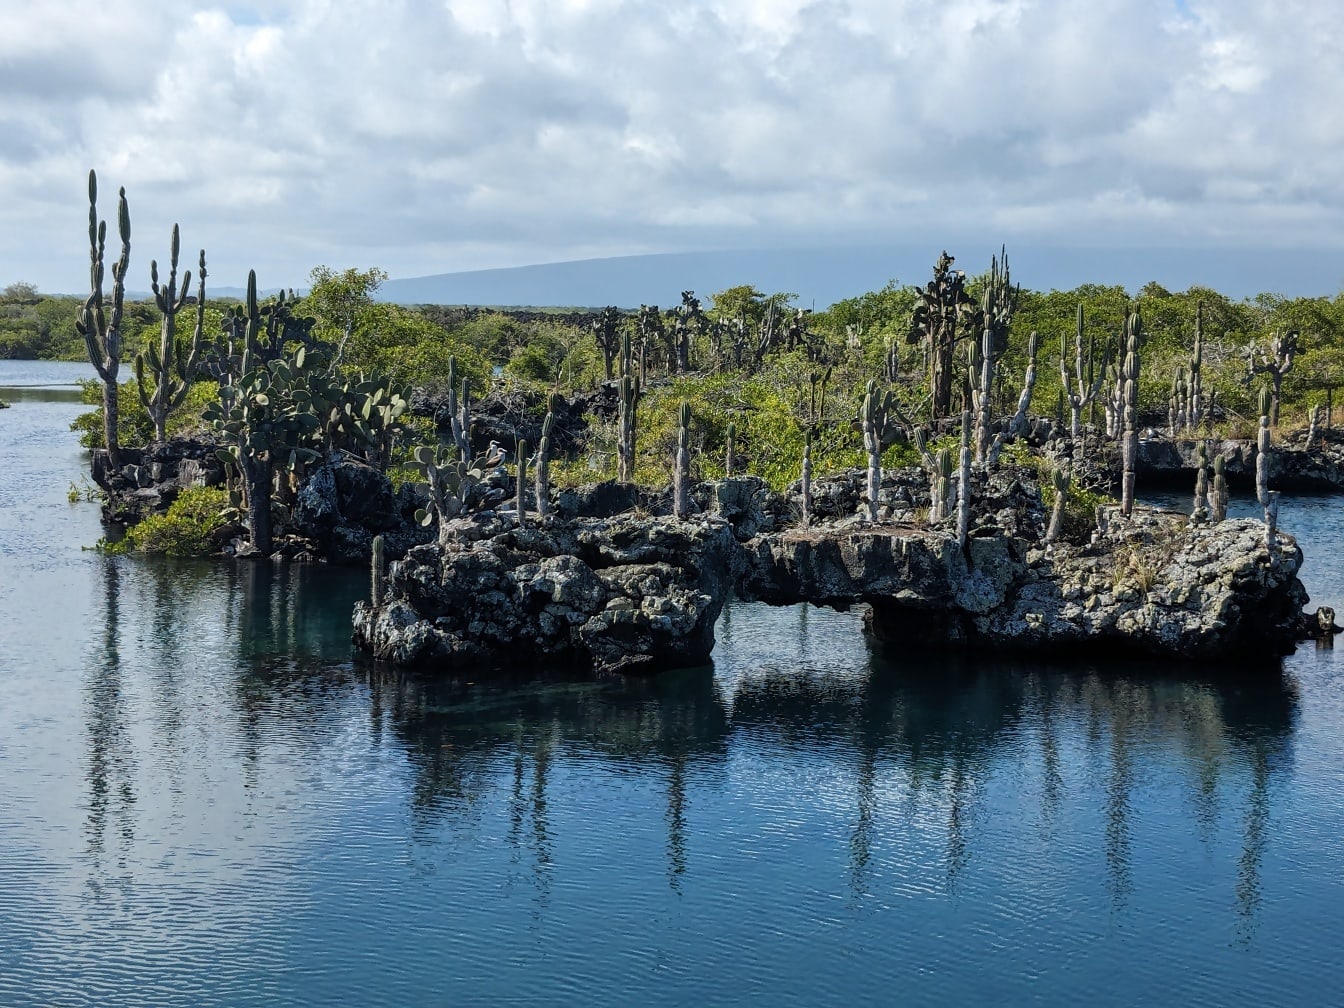 Coasta insulei Galapagos cu specii endemice de cactuși (Opuntia galapageias)